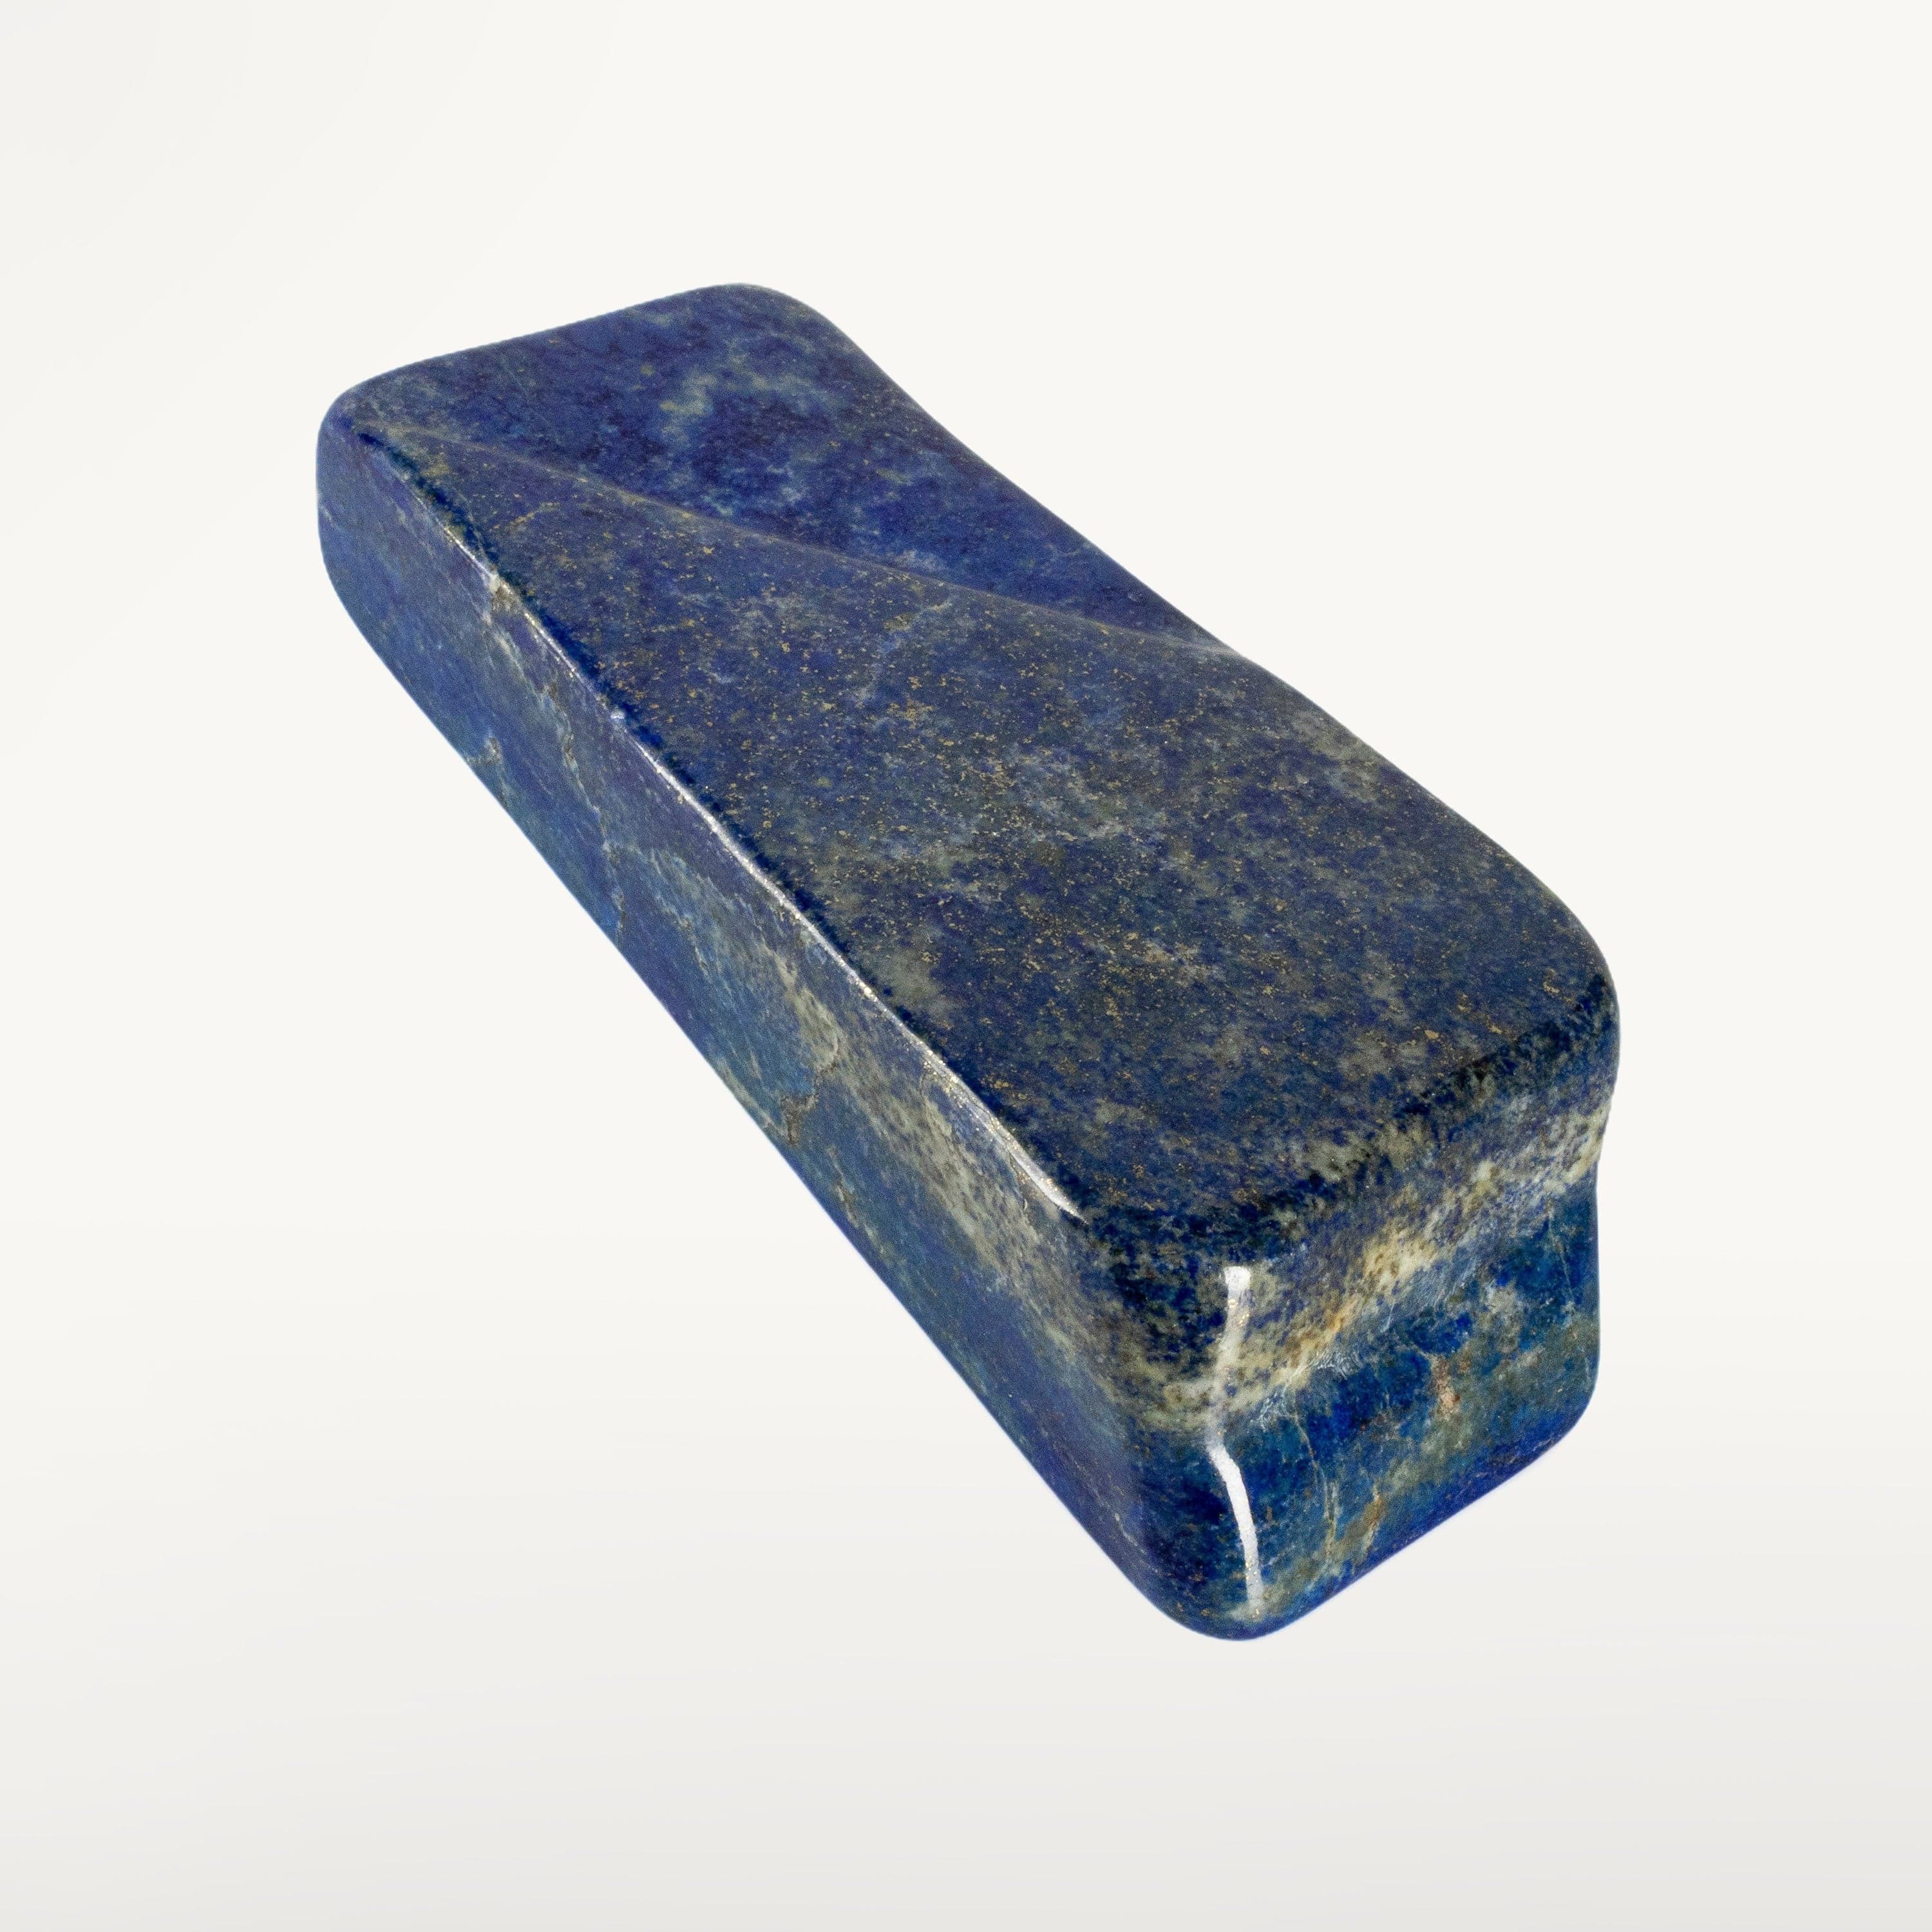 Kalifano Lapis Lapis Lazuli Freeform from Afghanistan - 7" / 1,080 grams LP1100.010